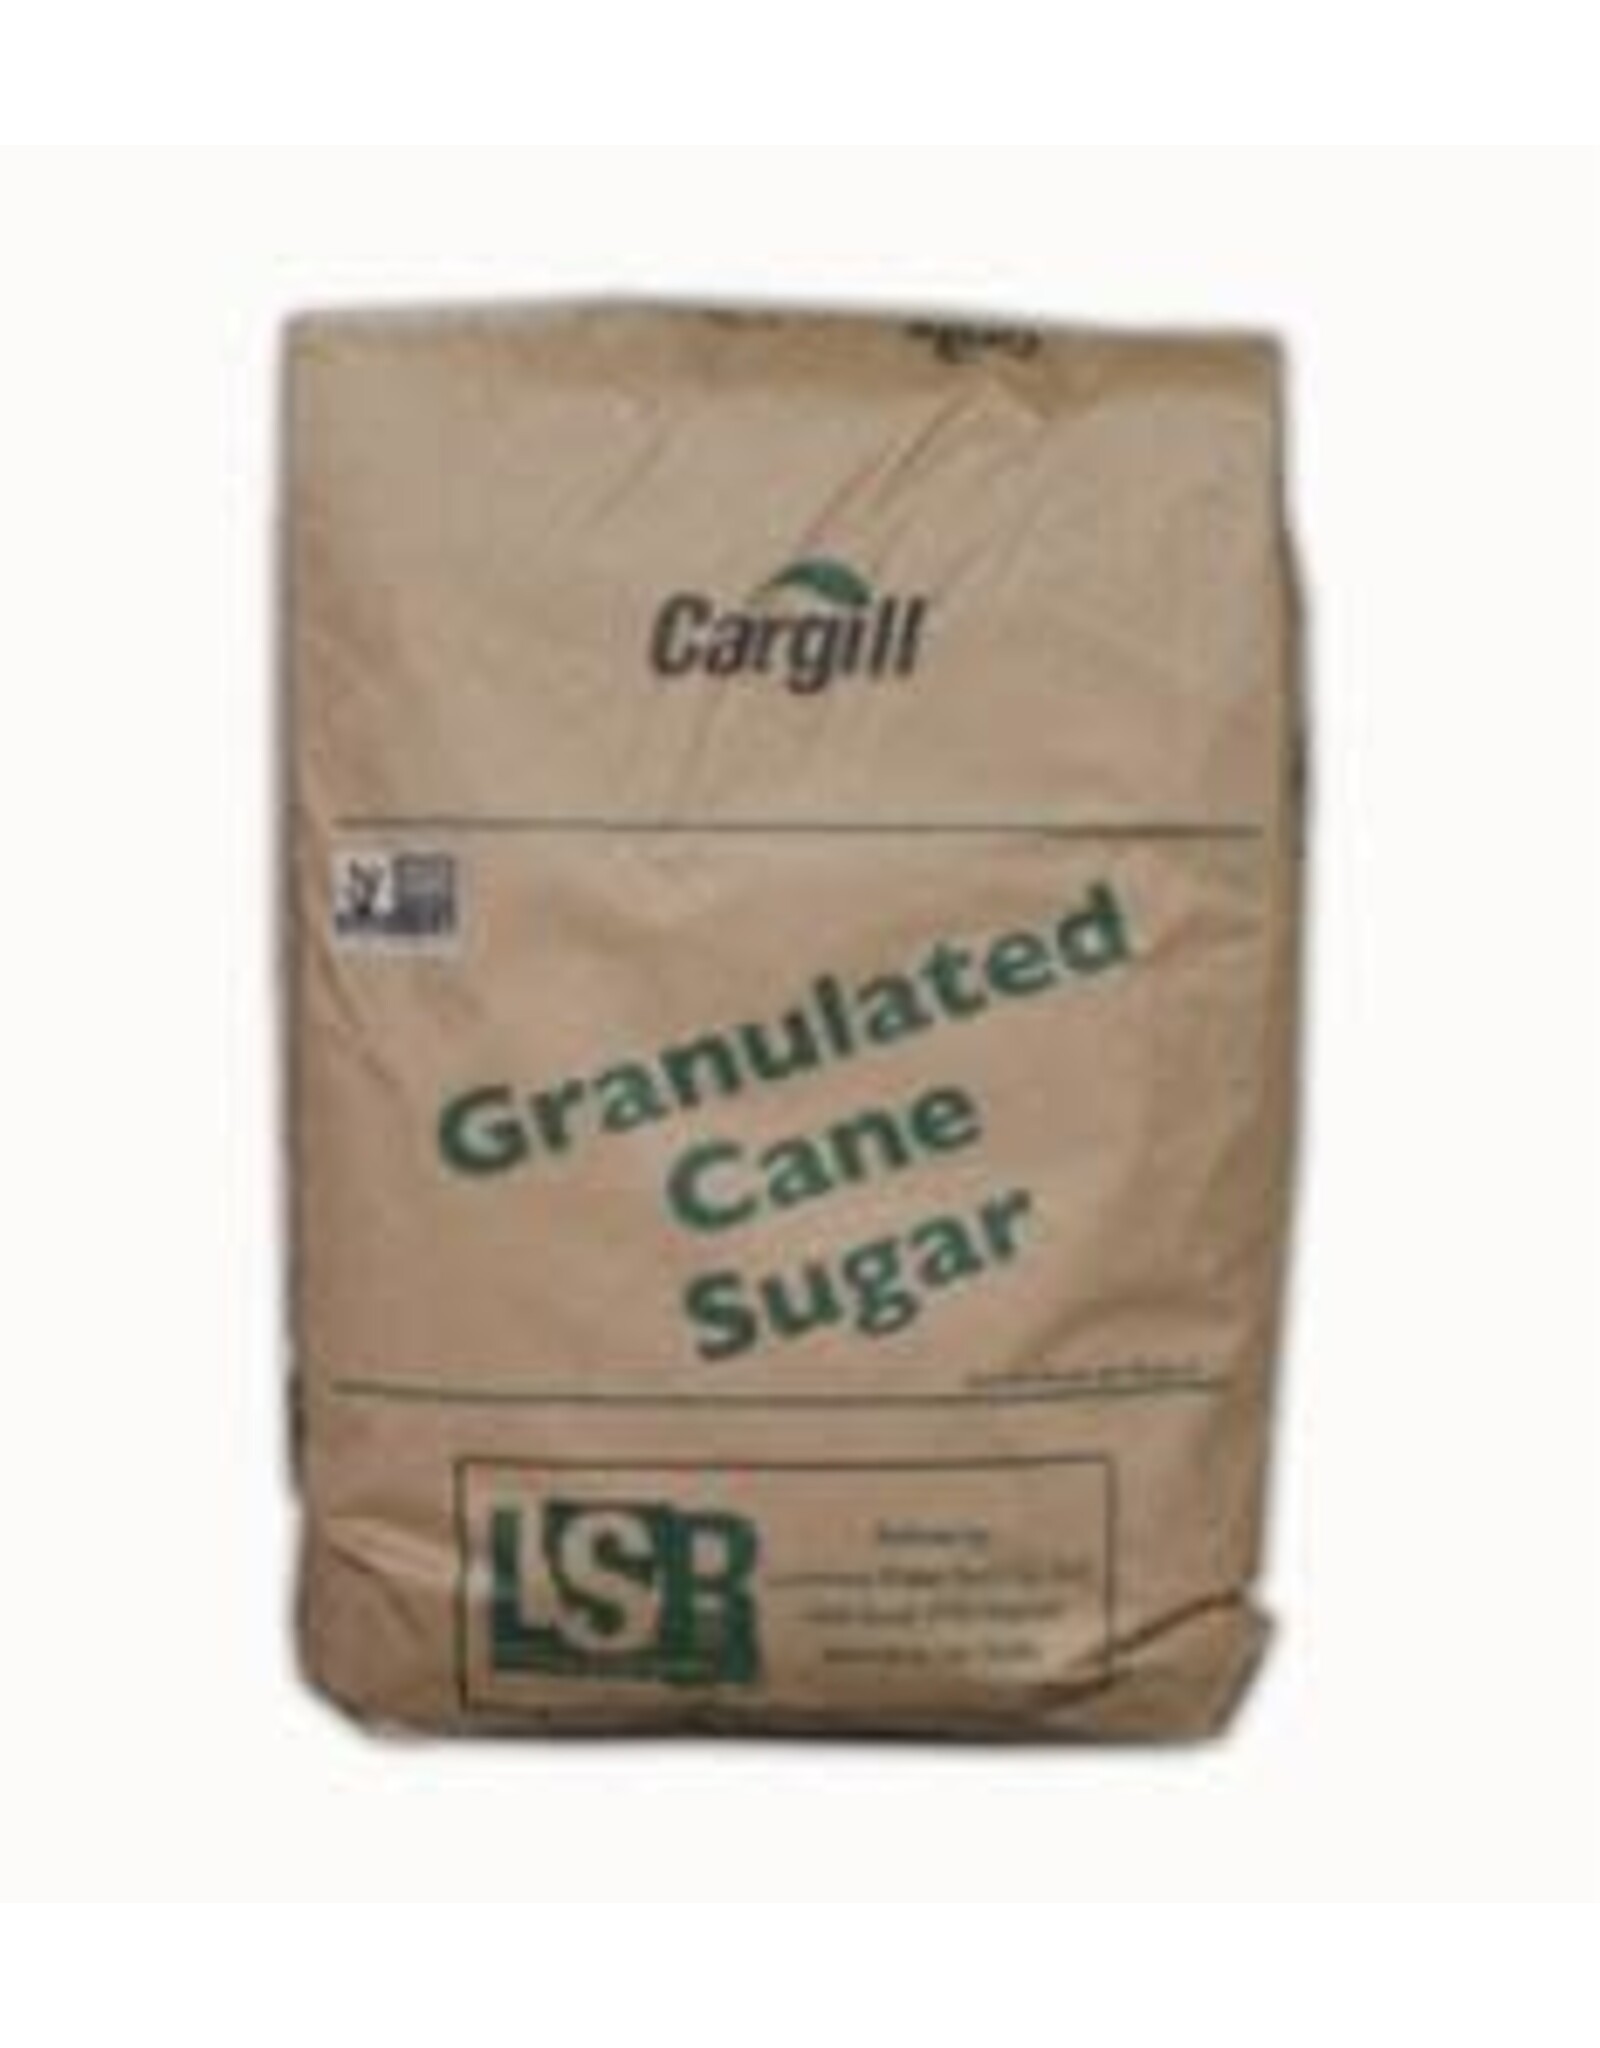 The Cellar White cane sugar 50 LB bag